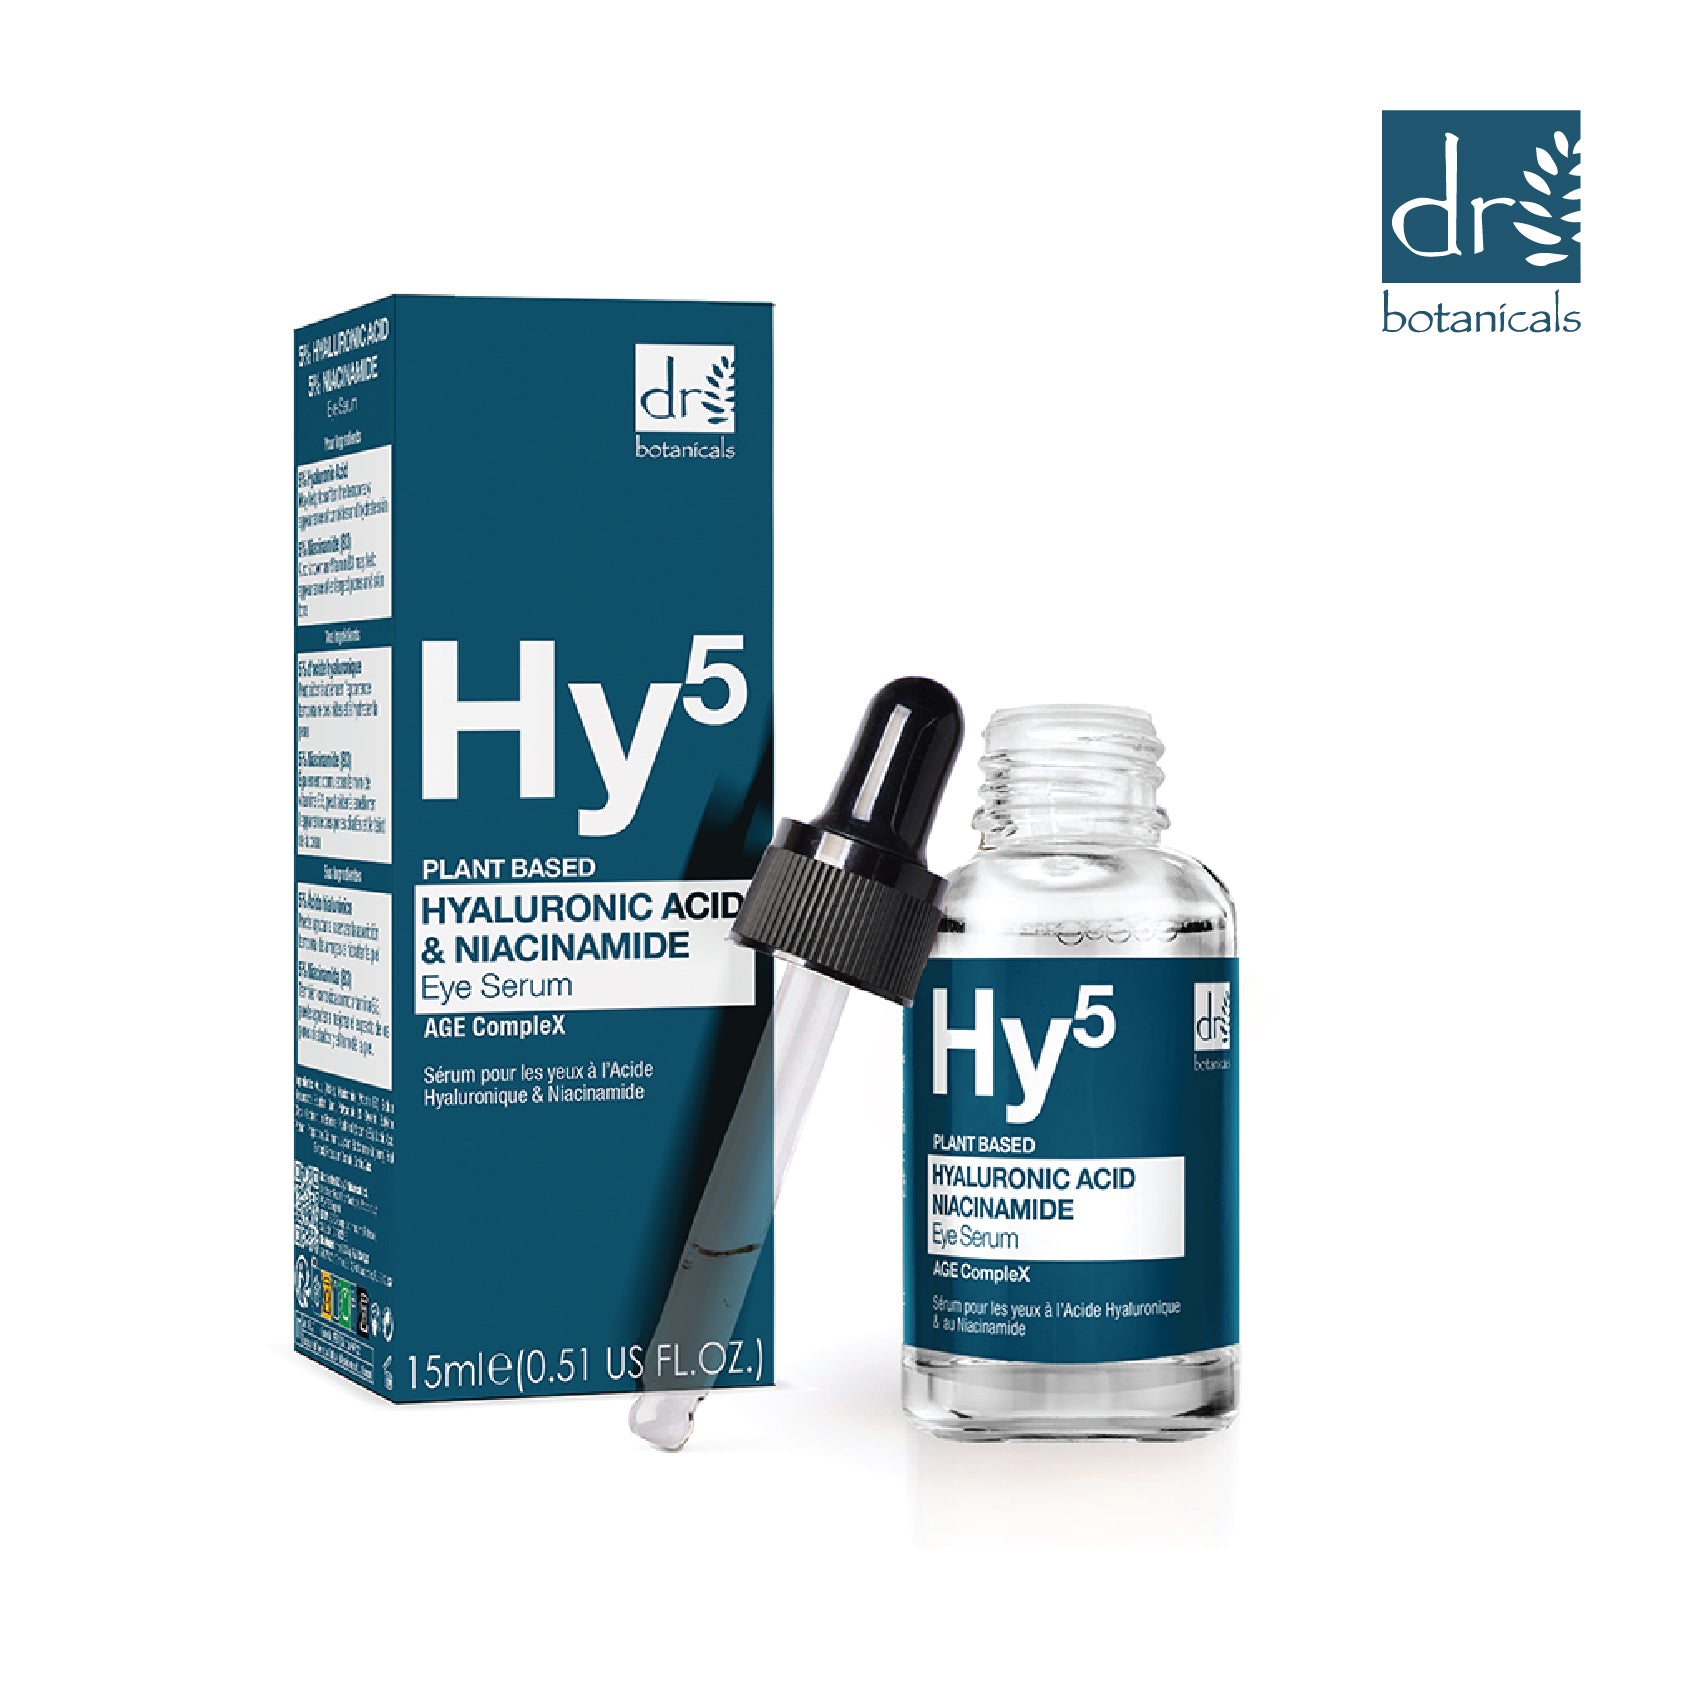 Vitamin C & Hyaluronic Acid Anti-ageing Facial Serum 30ml + Hyaluronic acid & Niacinamide Anti-ageing Eye Serum 15ml